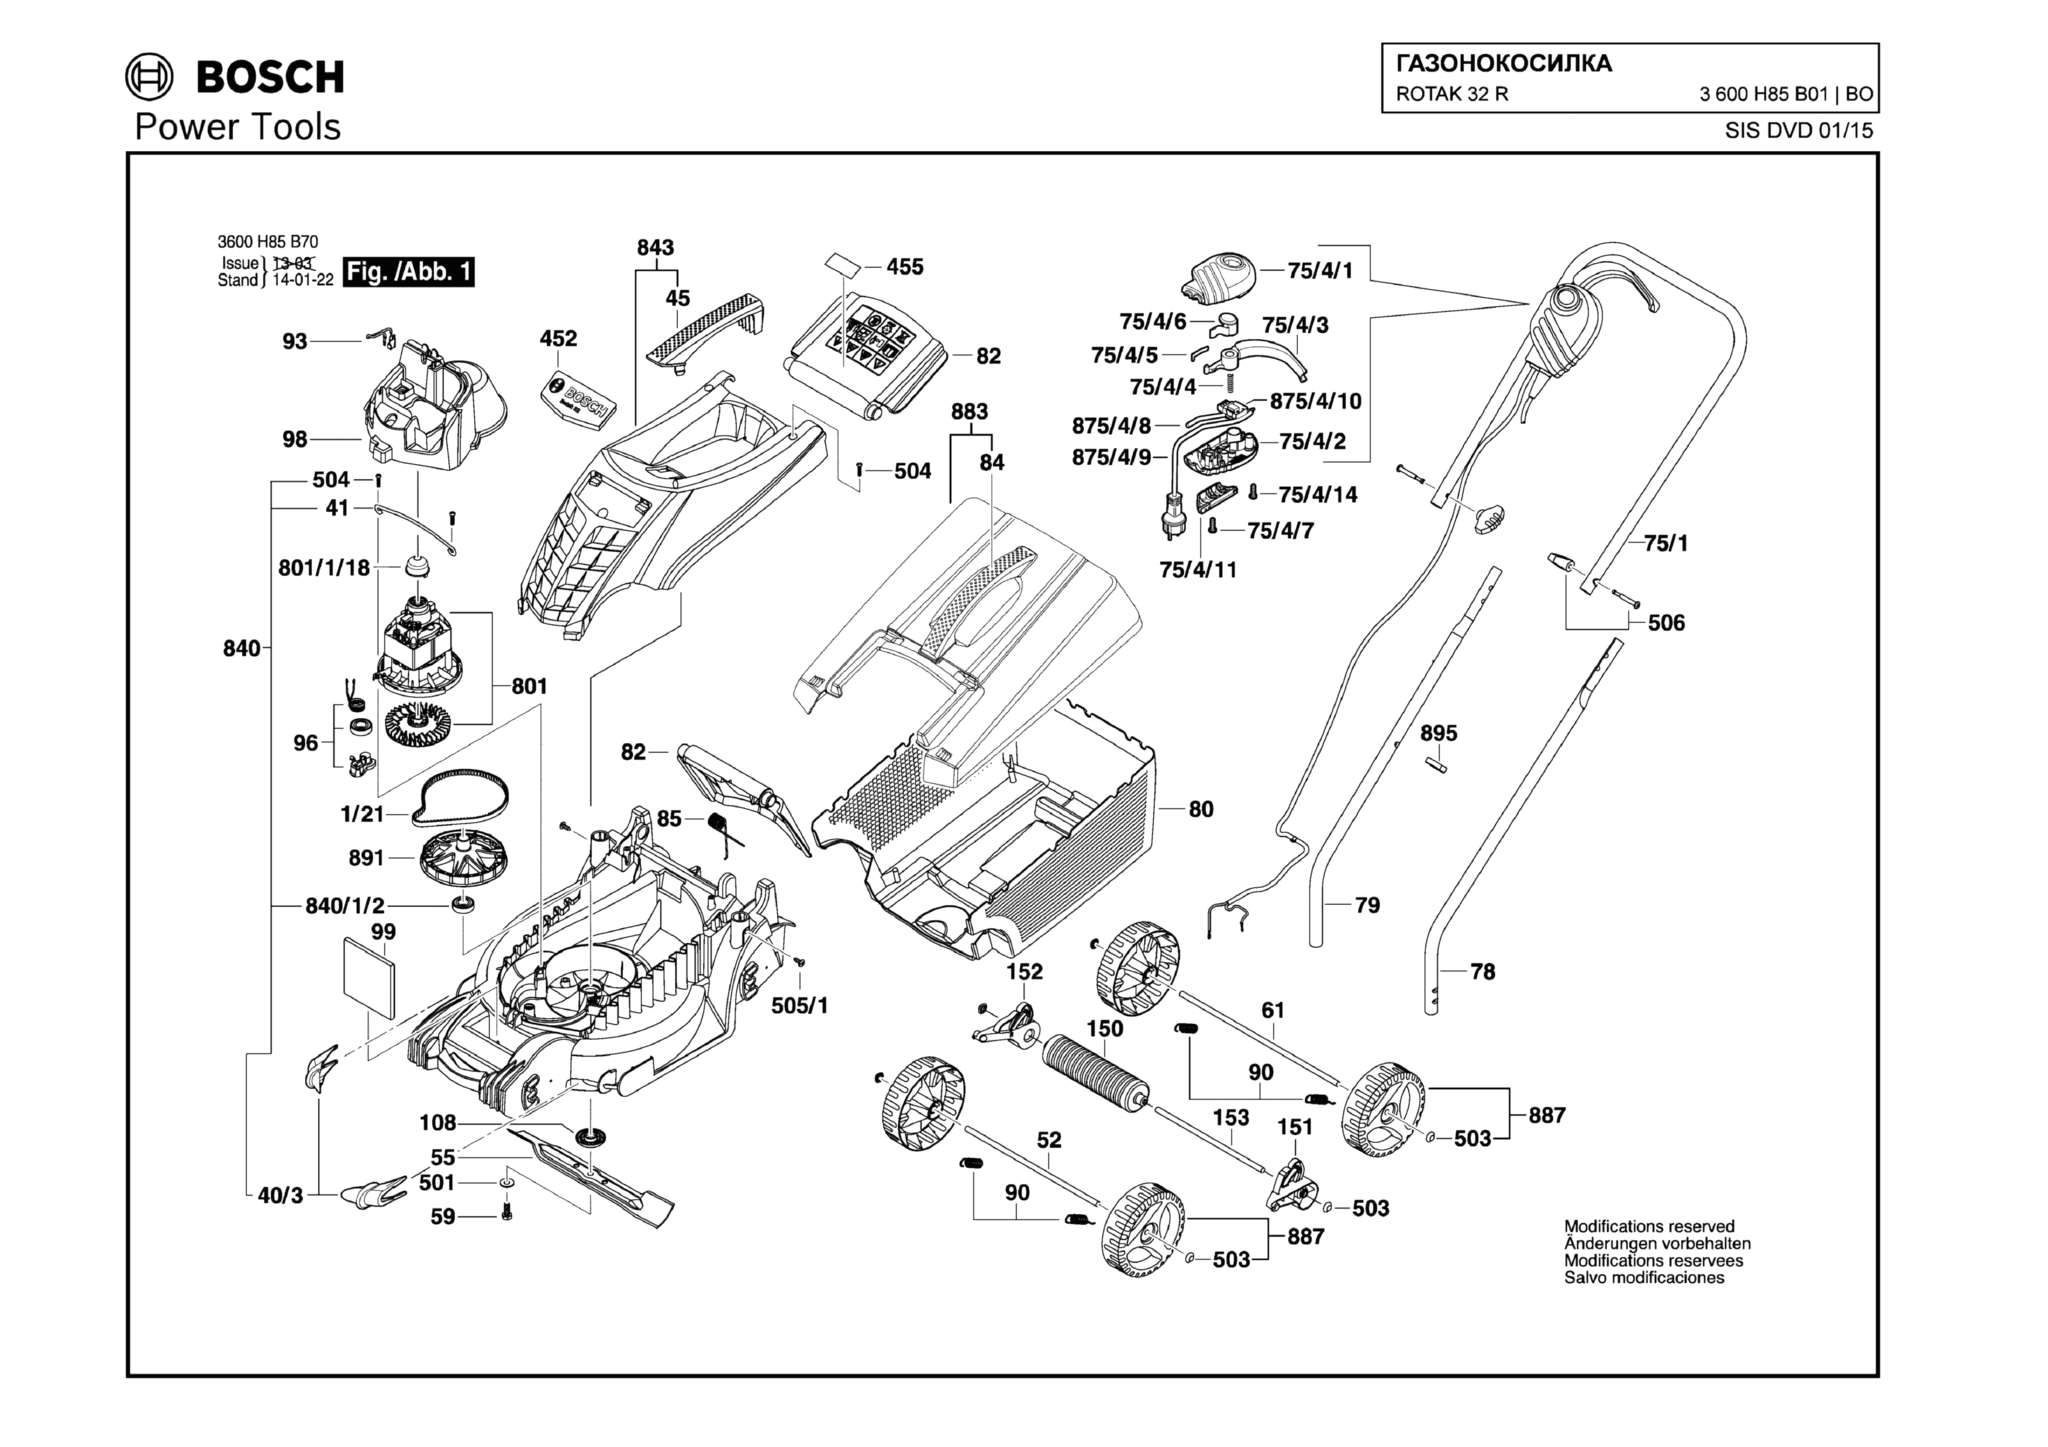 Запчасти, схема и деталировка Bosch ROTAK 32 R (ТИП 3600H85B01)